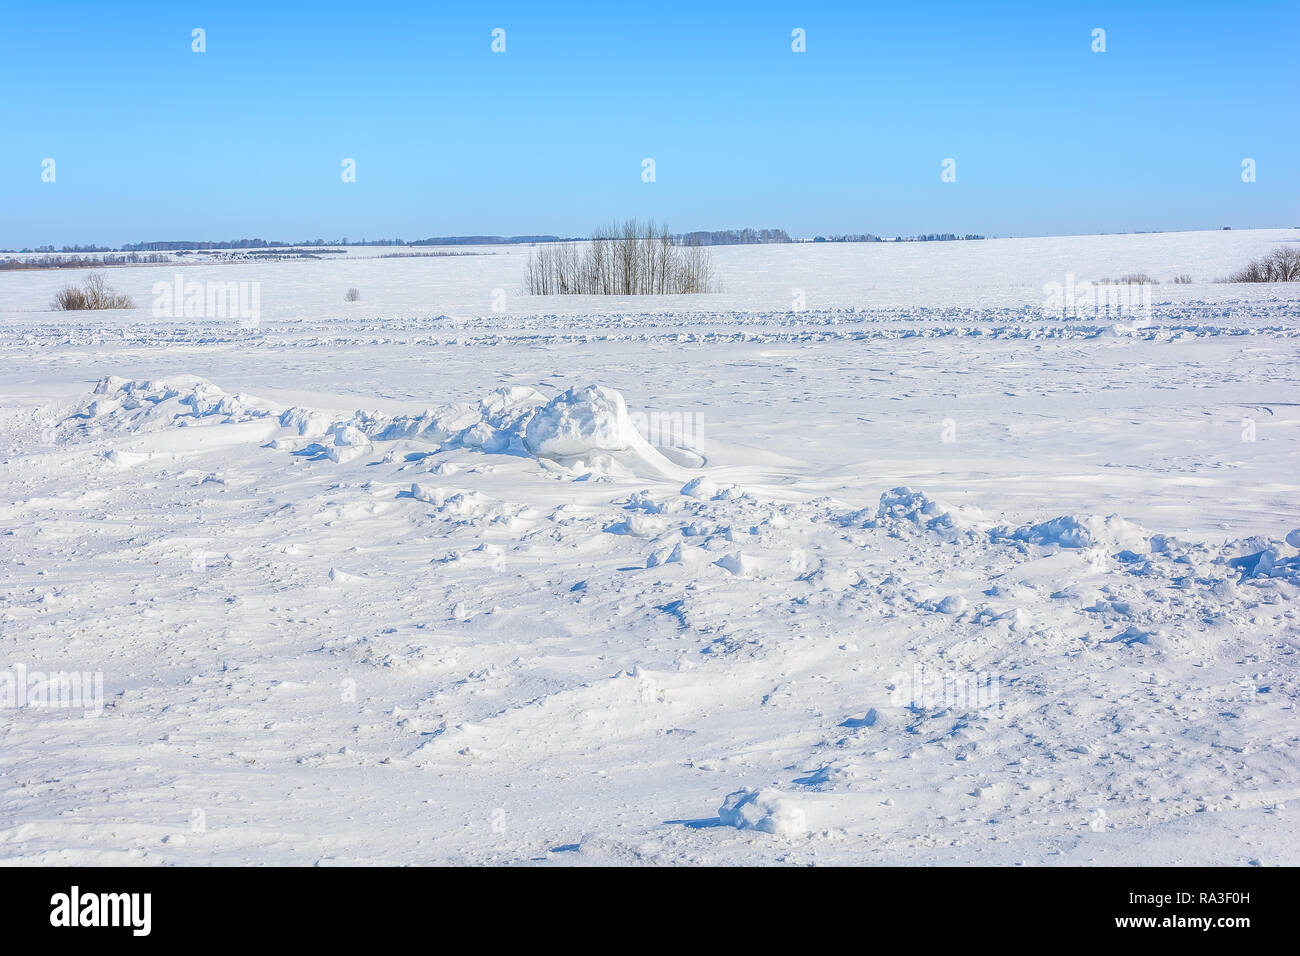 A lonely tree in a snowy field in winter Stock Photo